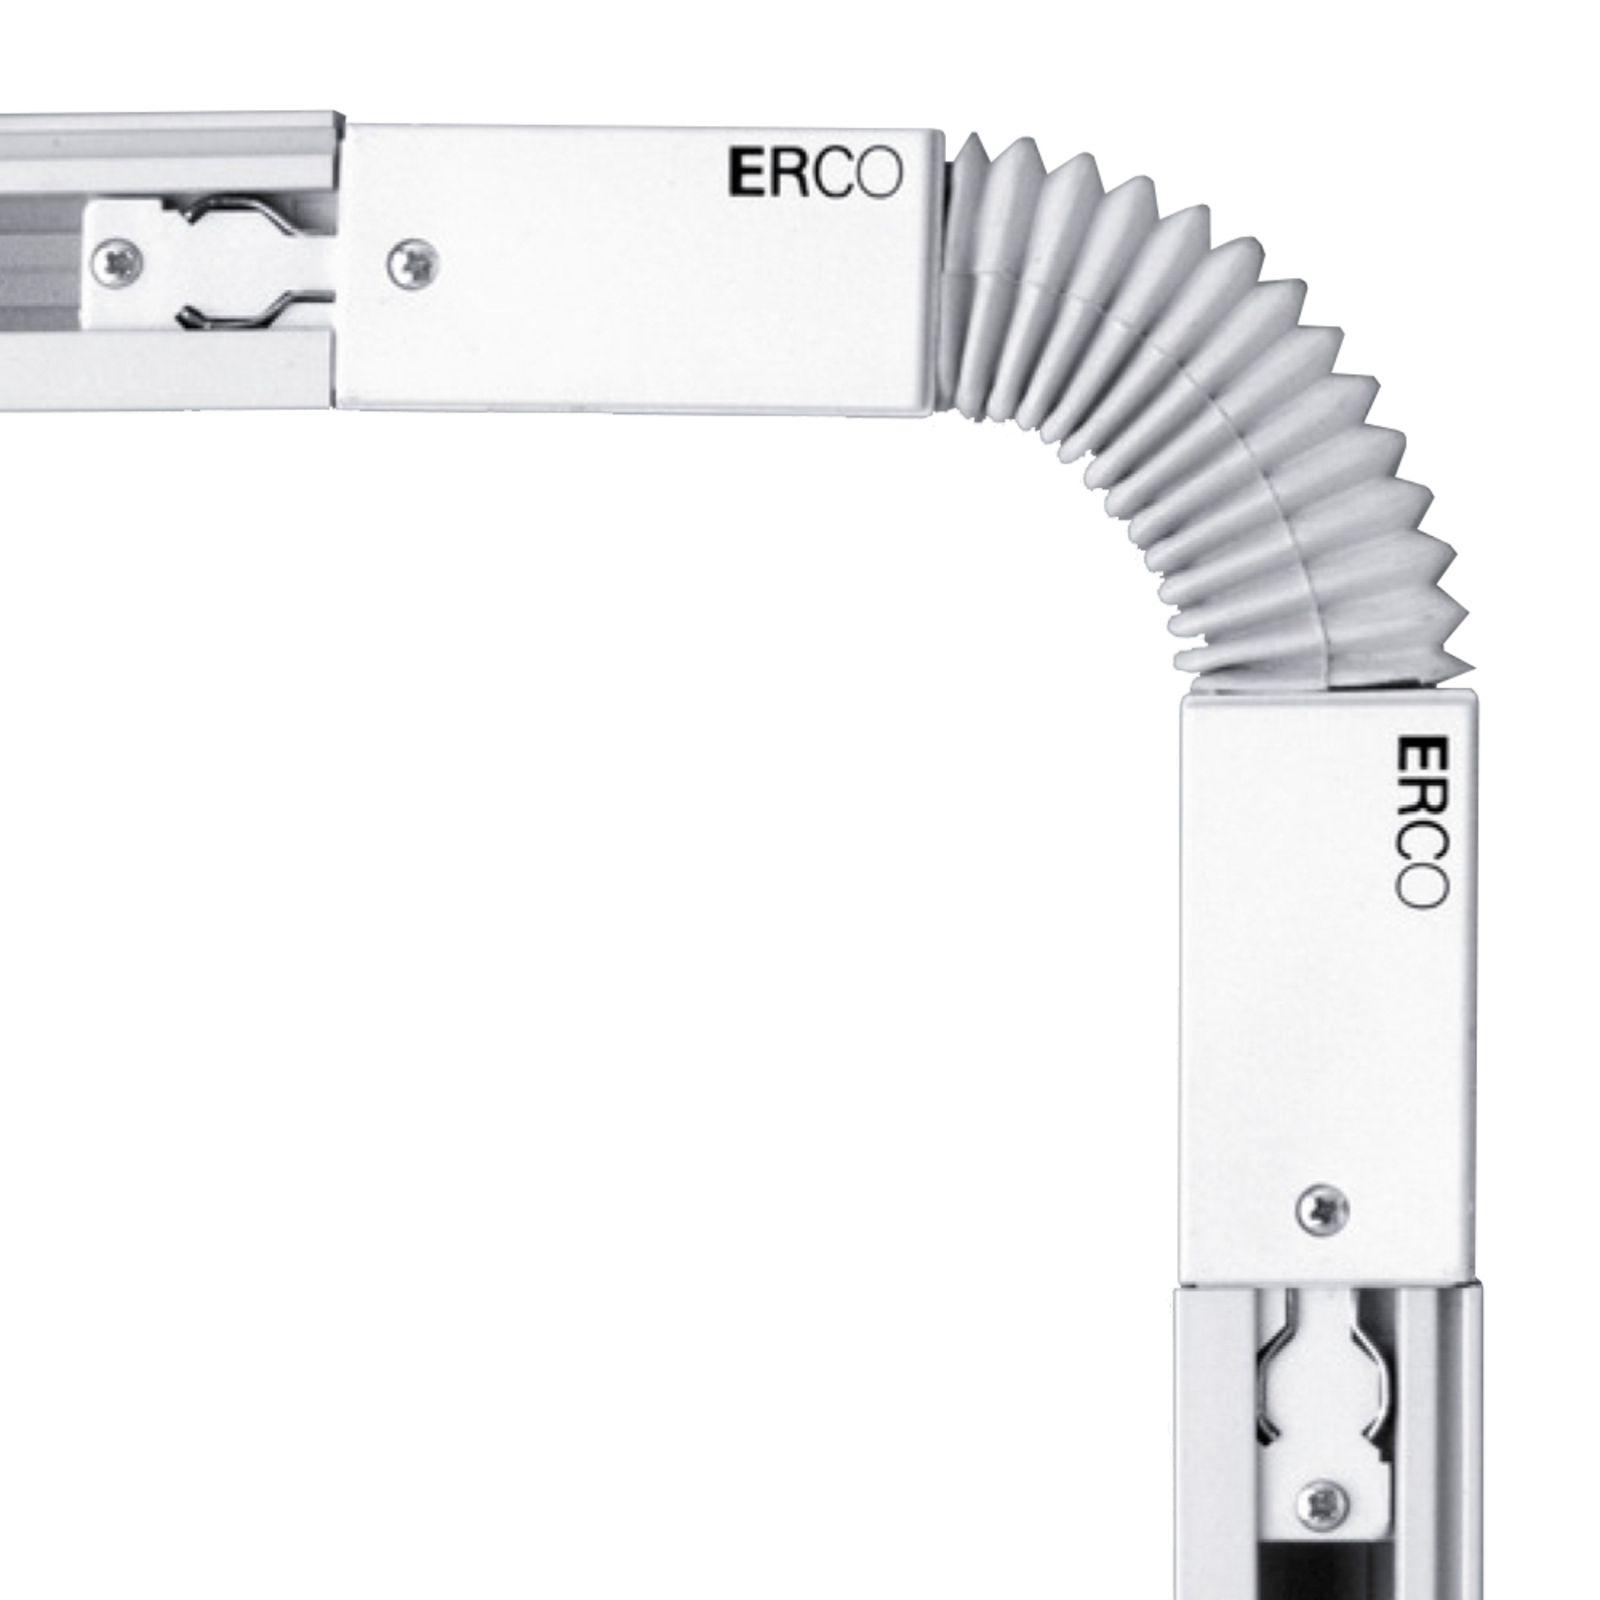 ERCO multiflex-koppling 3-fas skena vit